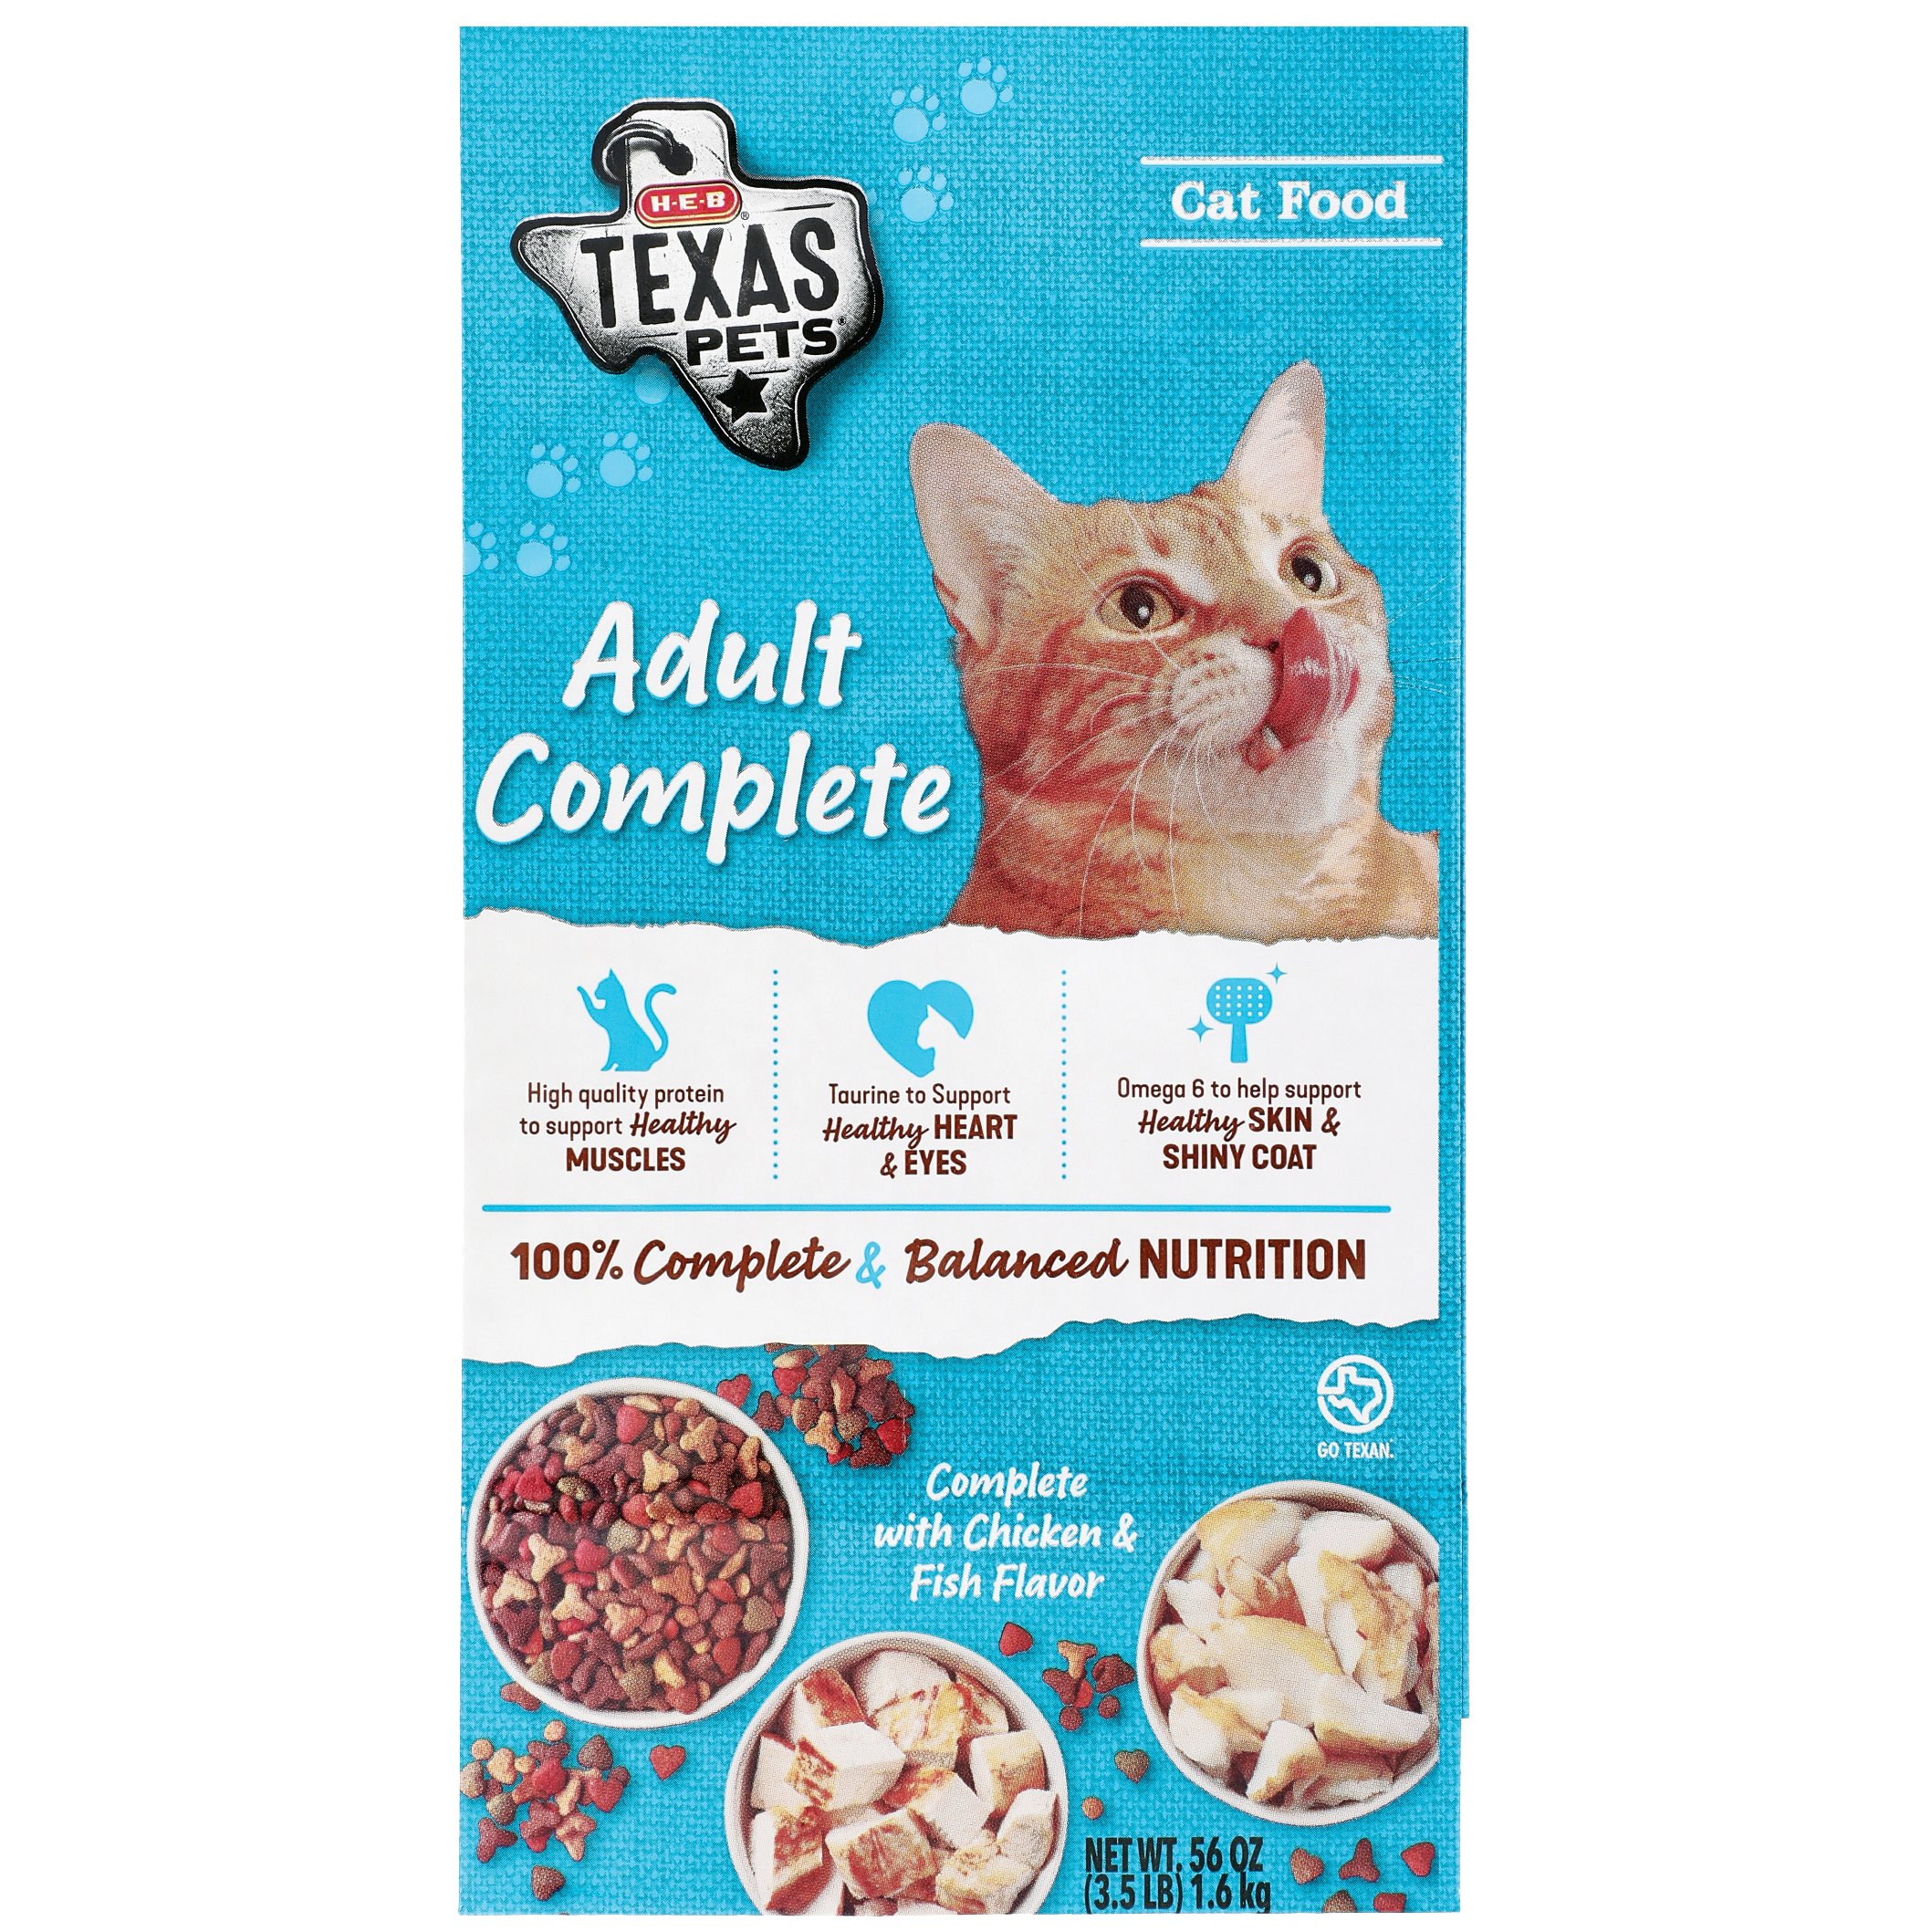 HEB Texas Pets Adult Complete Formula Dry Cat Food Shop Cats at HEB